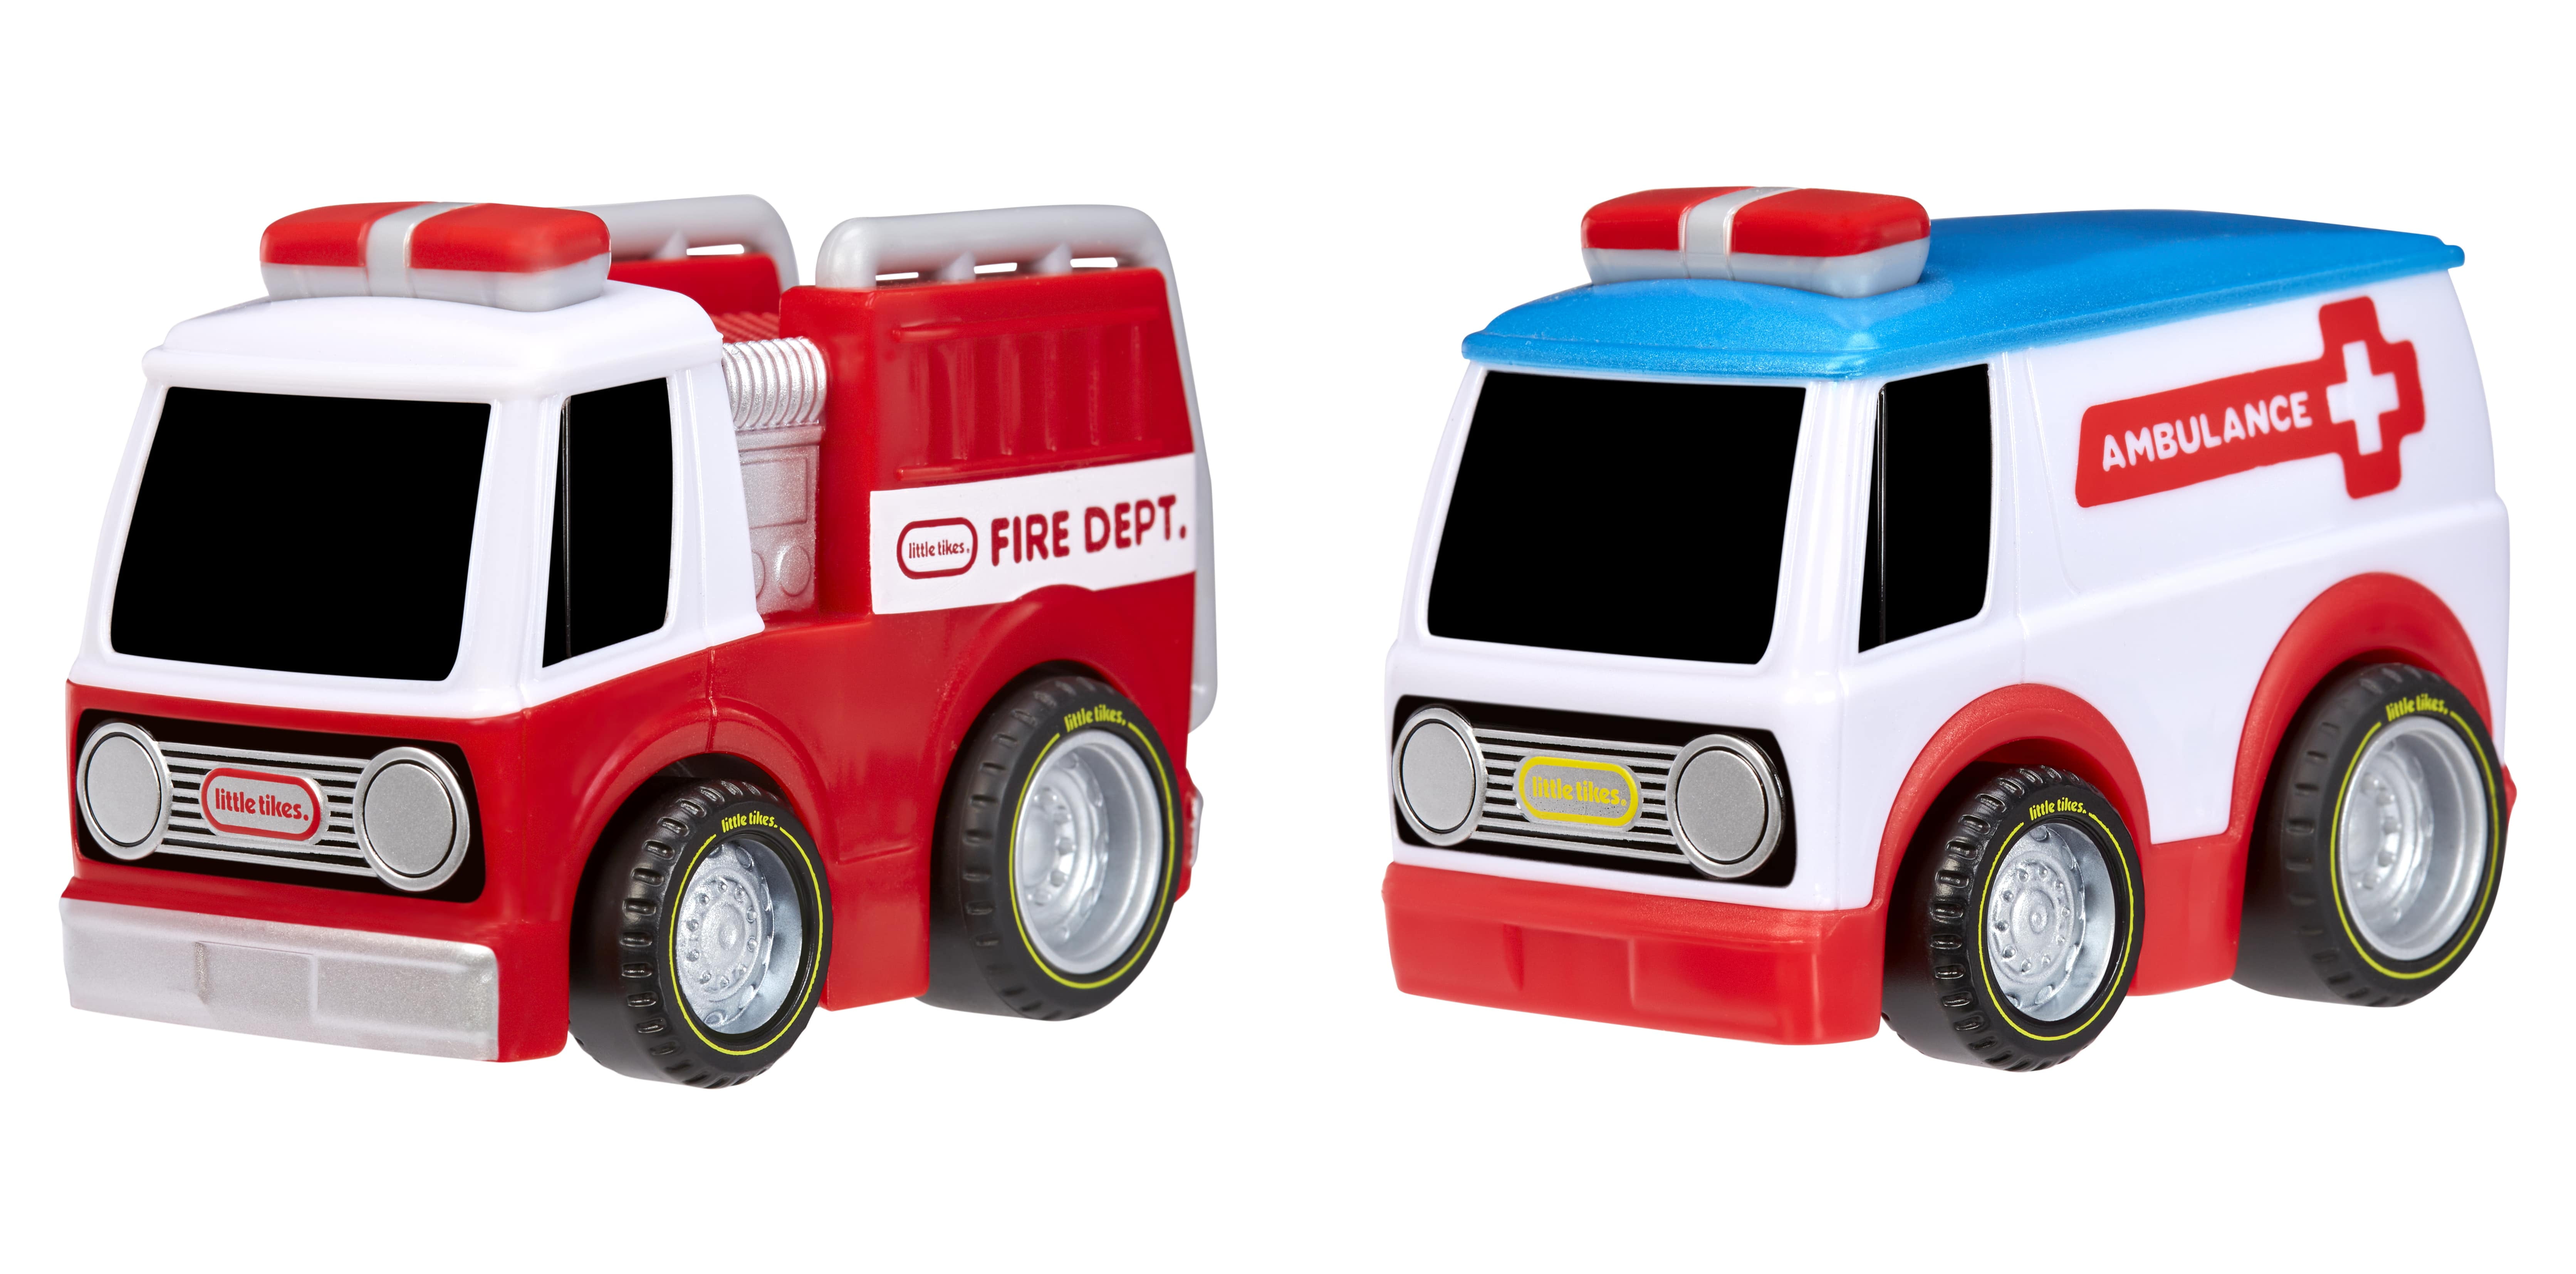 Little Blue Vehicles Plastic Bowl For Boy Kids Trains Cars Firetrucks 